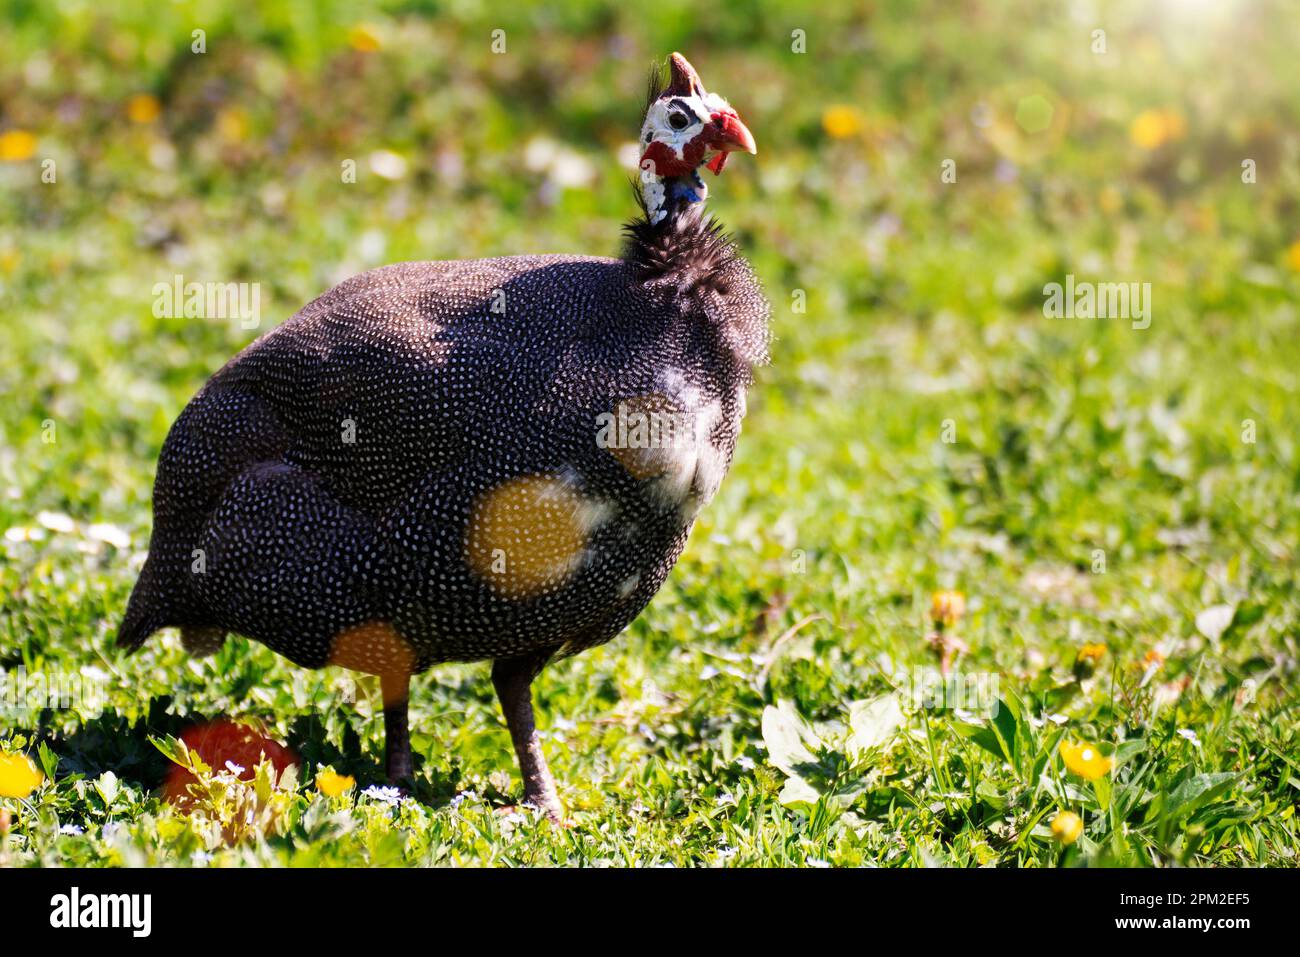 Guinea fowl grazing on green backyard grass Stock Photo